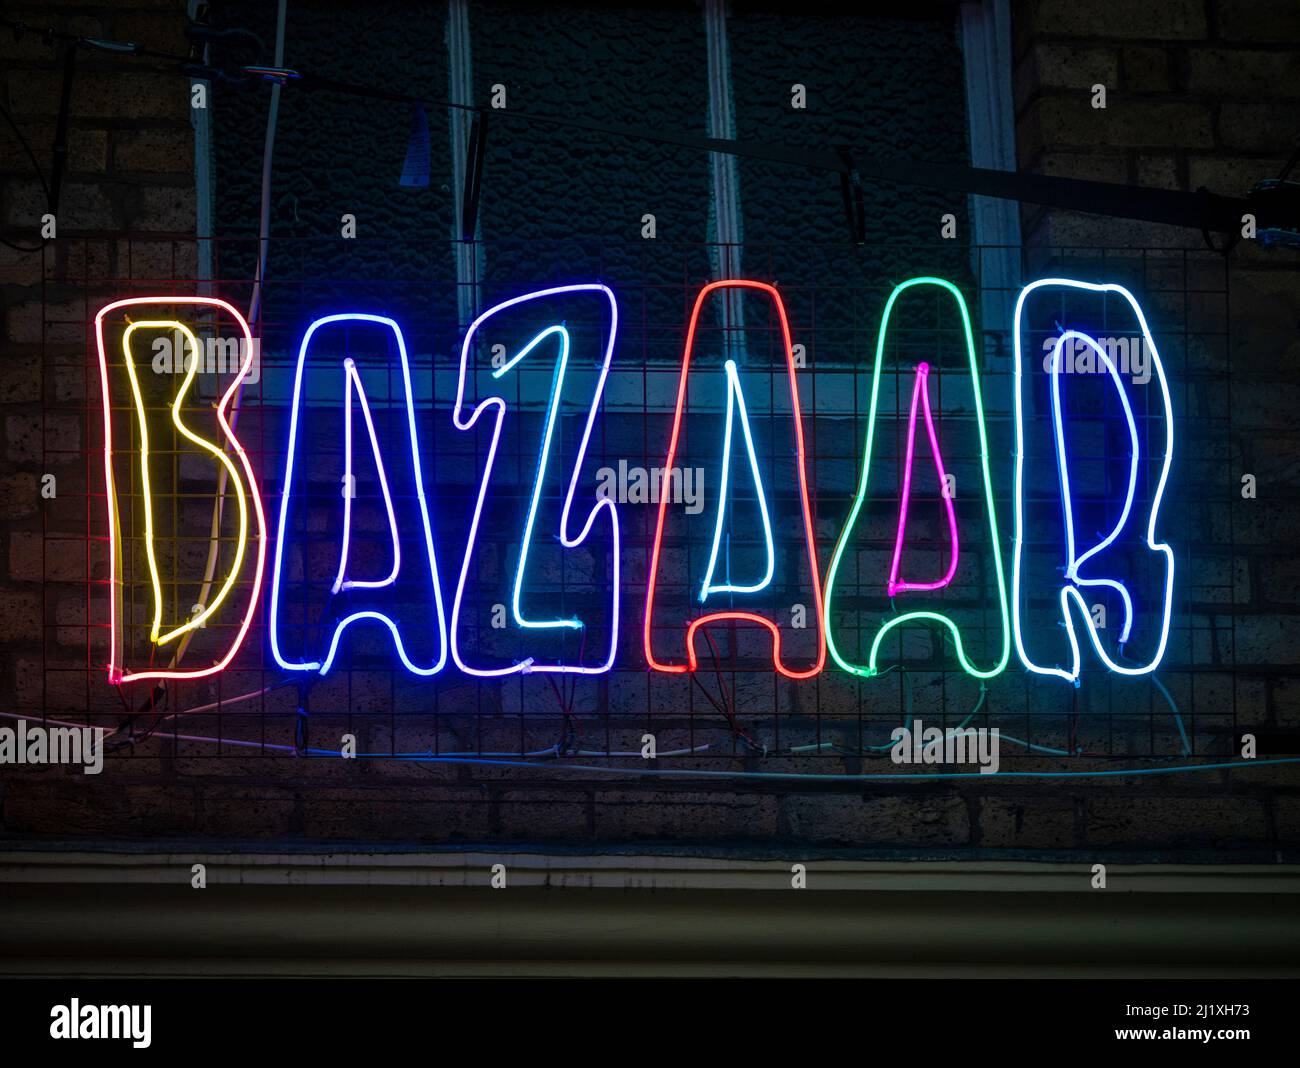 Neon light word 'Bazaar' part of an art installation by Chila Burman at Covent Garden, London. Stock Photo